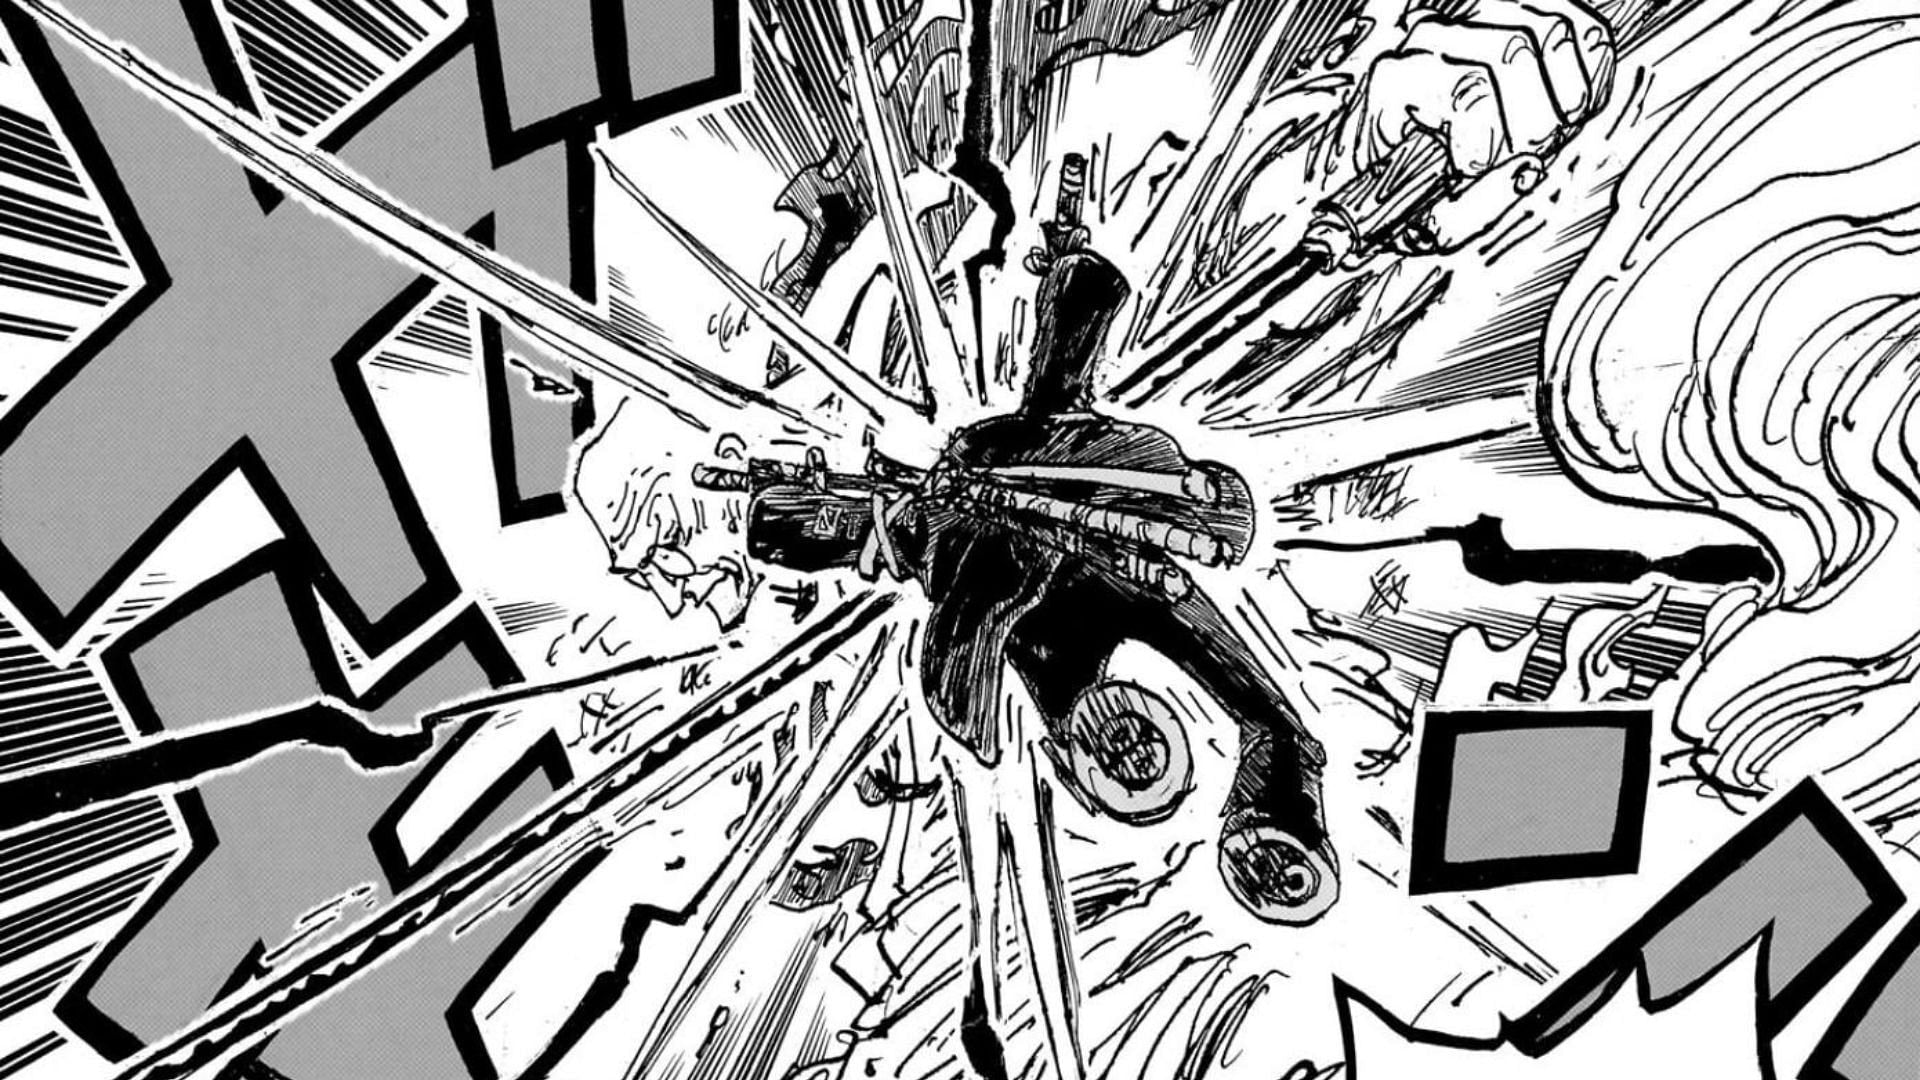 Zoro goes up against Nusjuro in chapter 1118 of the manga series (Image via Shueisha)